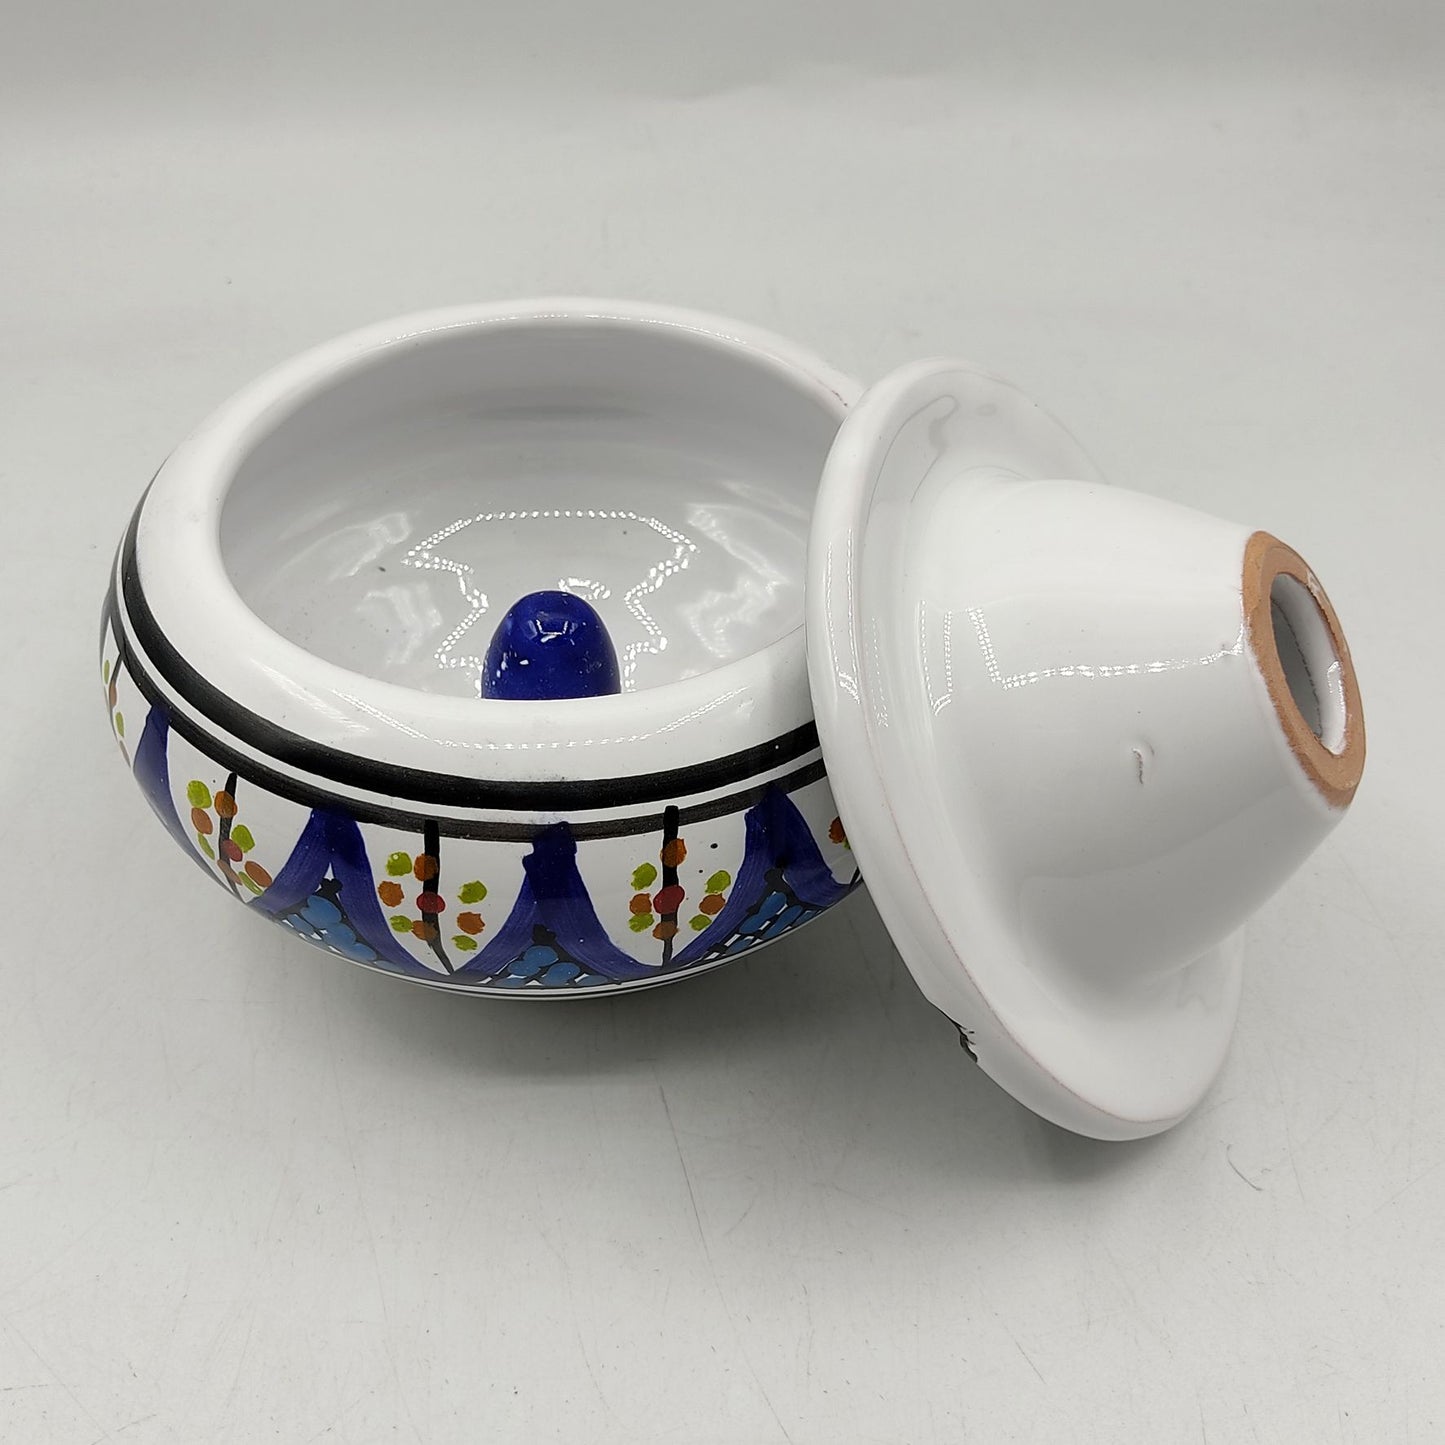 Etnico Arredo Posacenere Ceramica Antiodore Tunisina Marocchine 2007211200